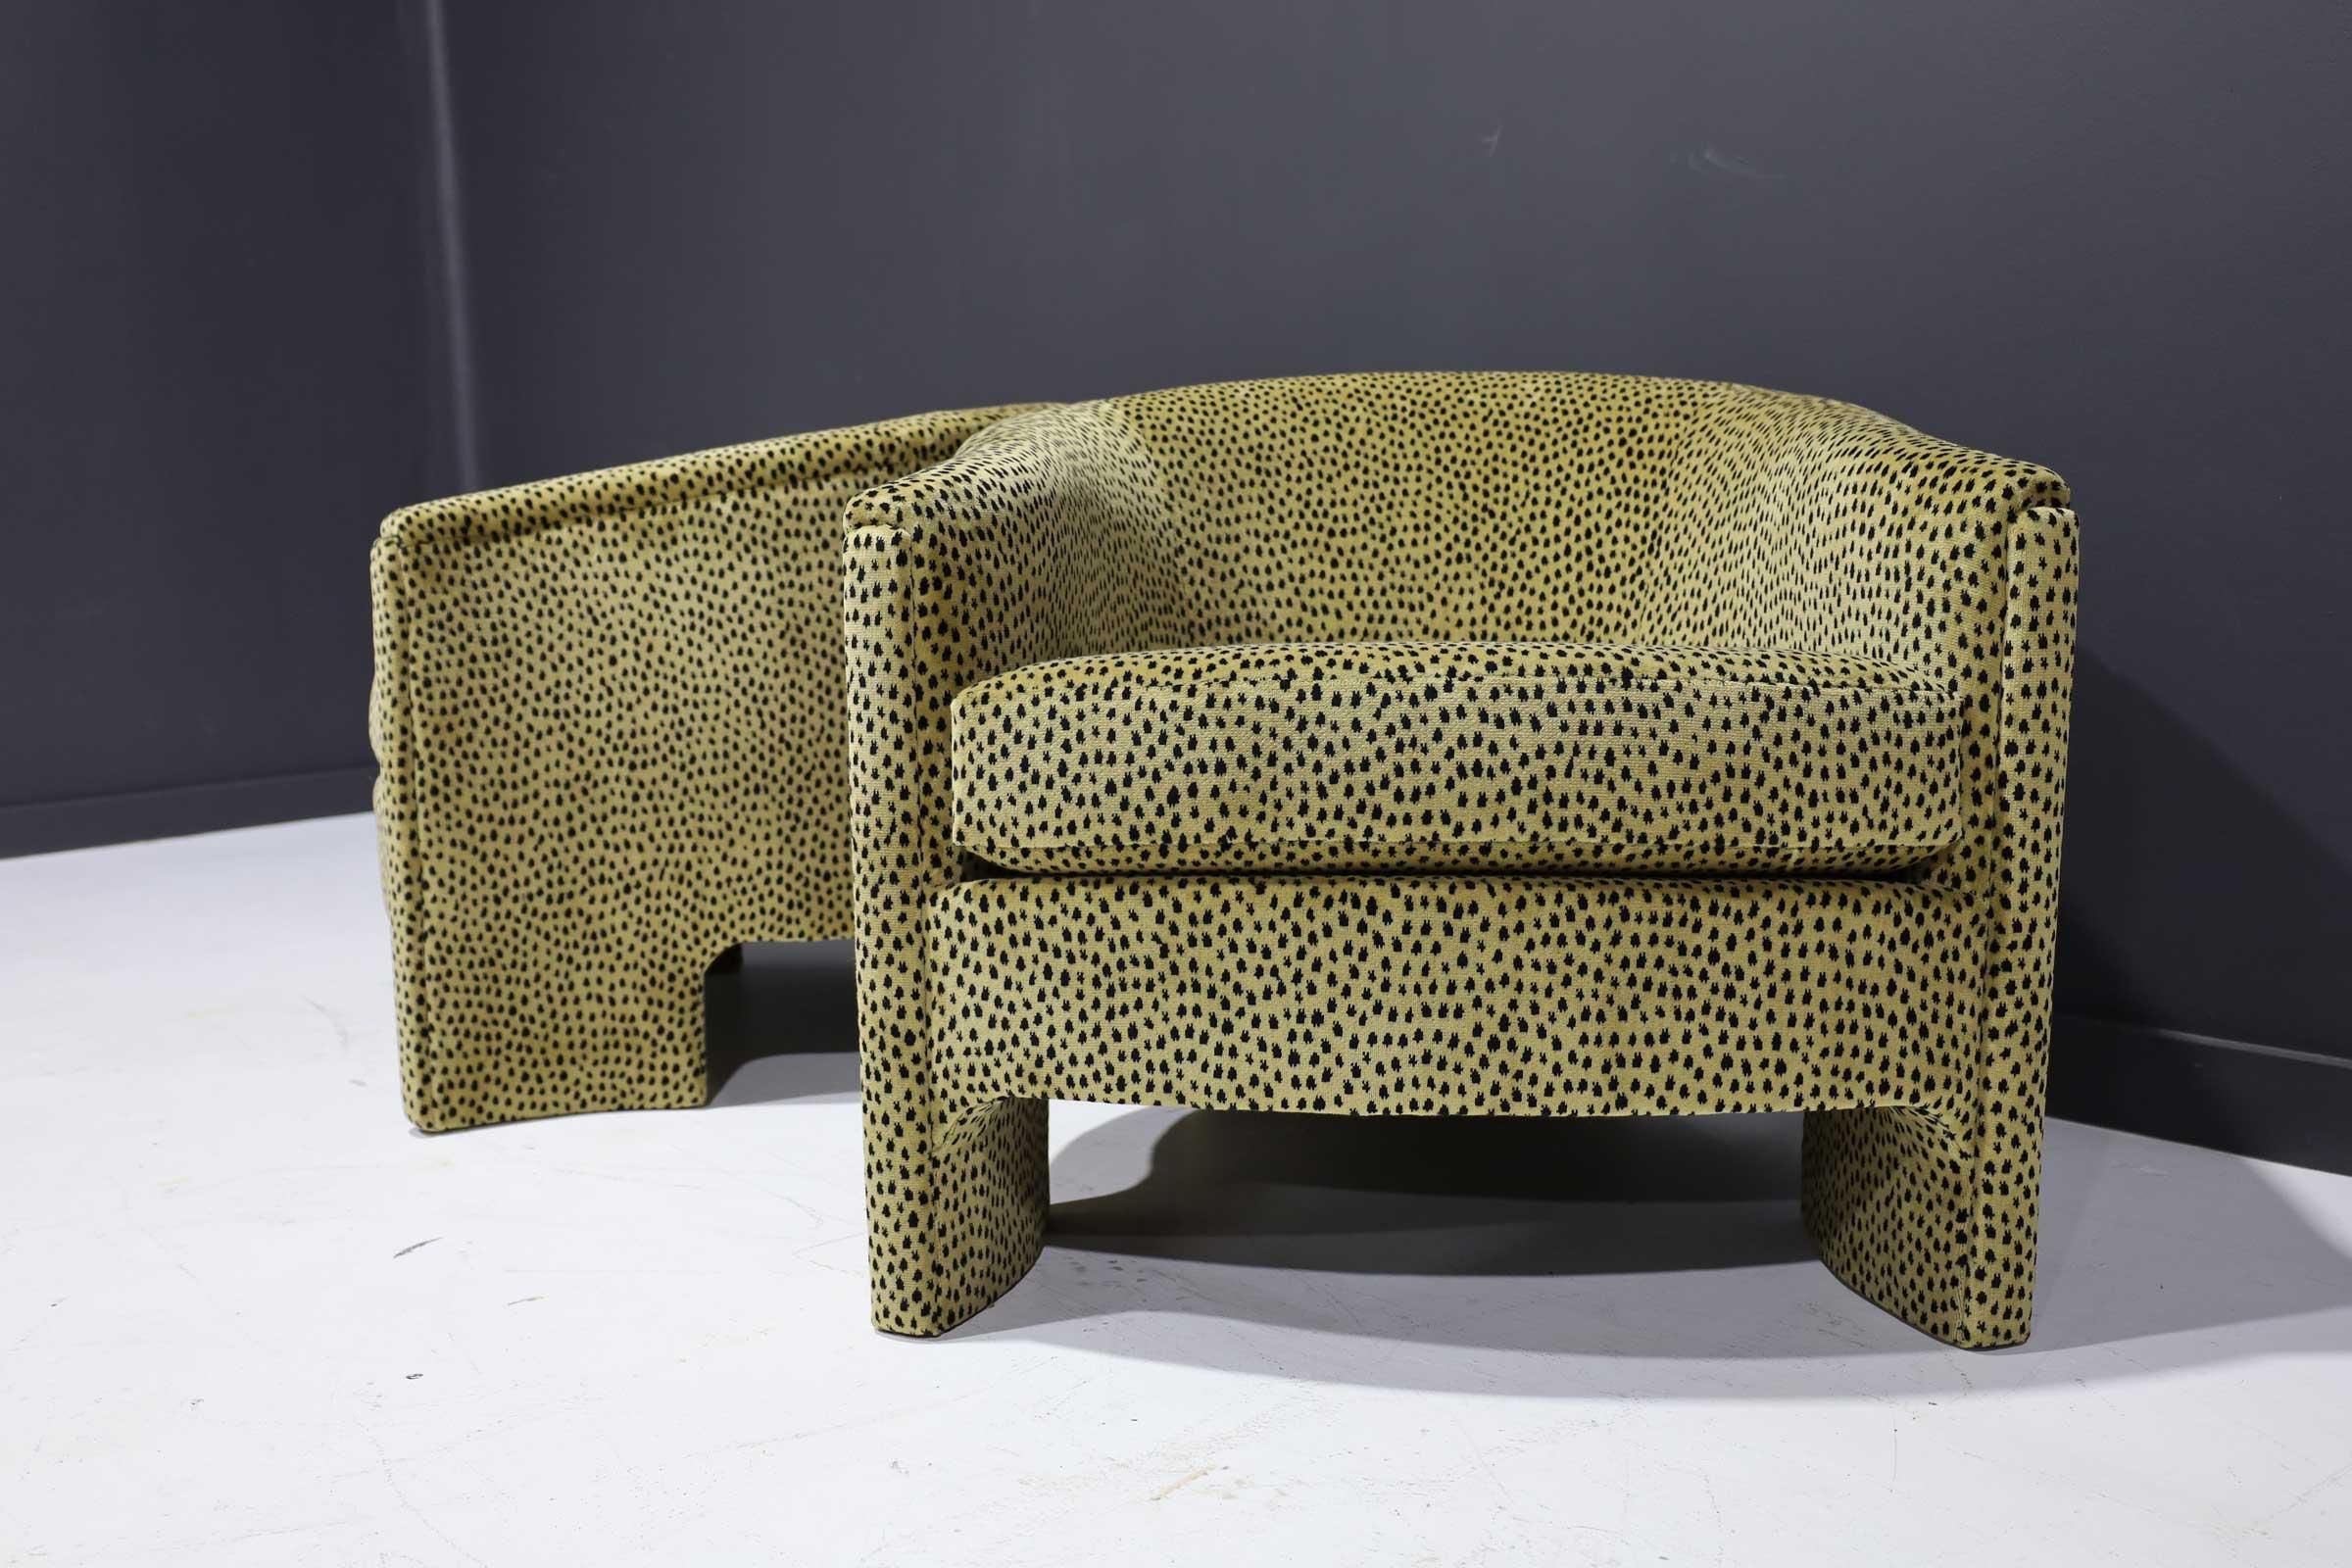 Pair of Mid Century Modern Tub Chairs in Cheetah Print Velvet For Sale 1